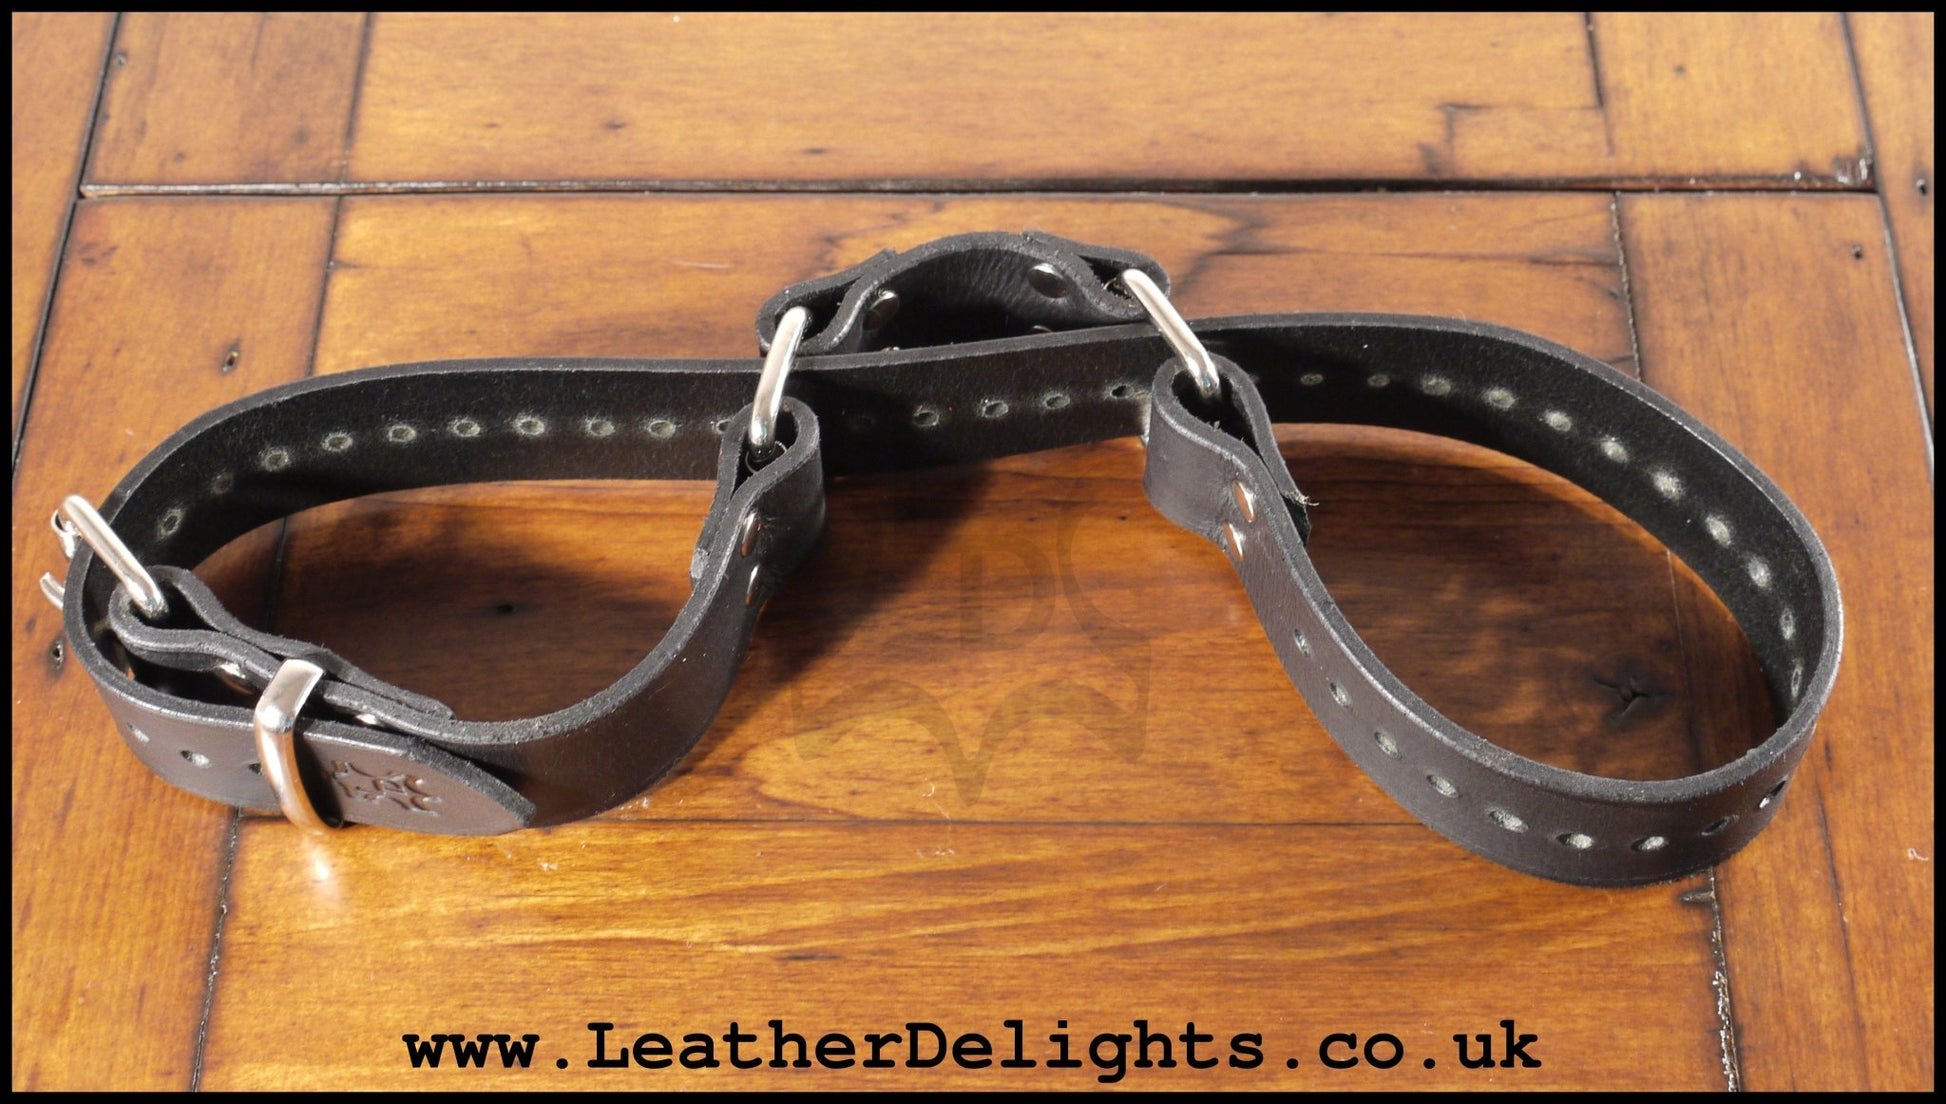 Bondage Restraint Belt - Leather Delights